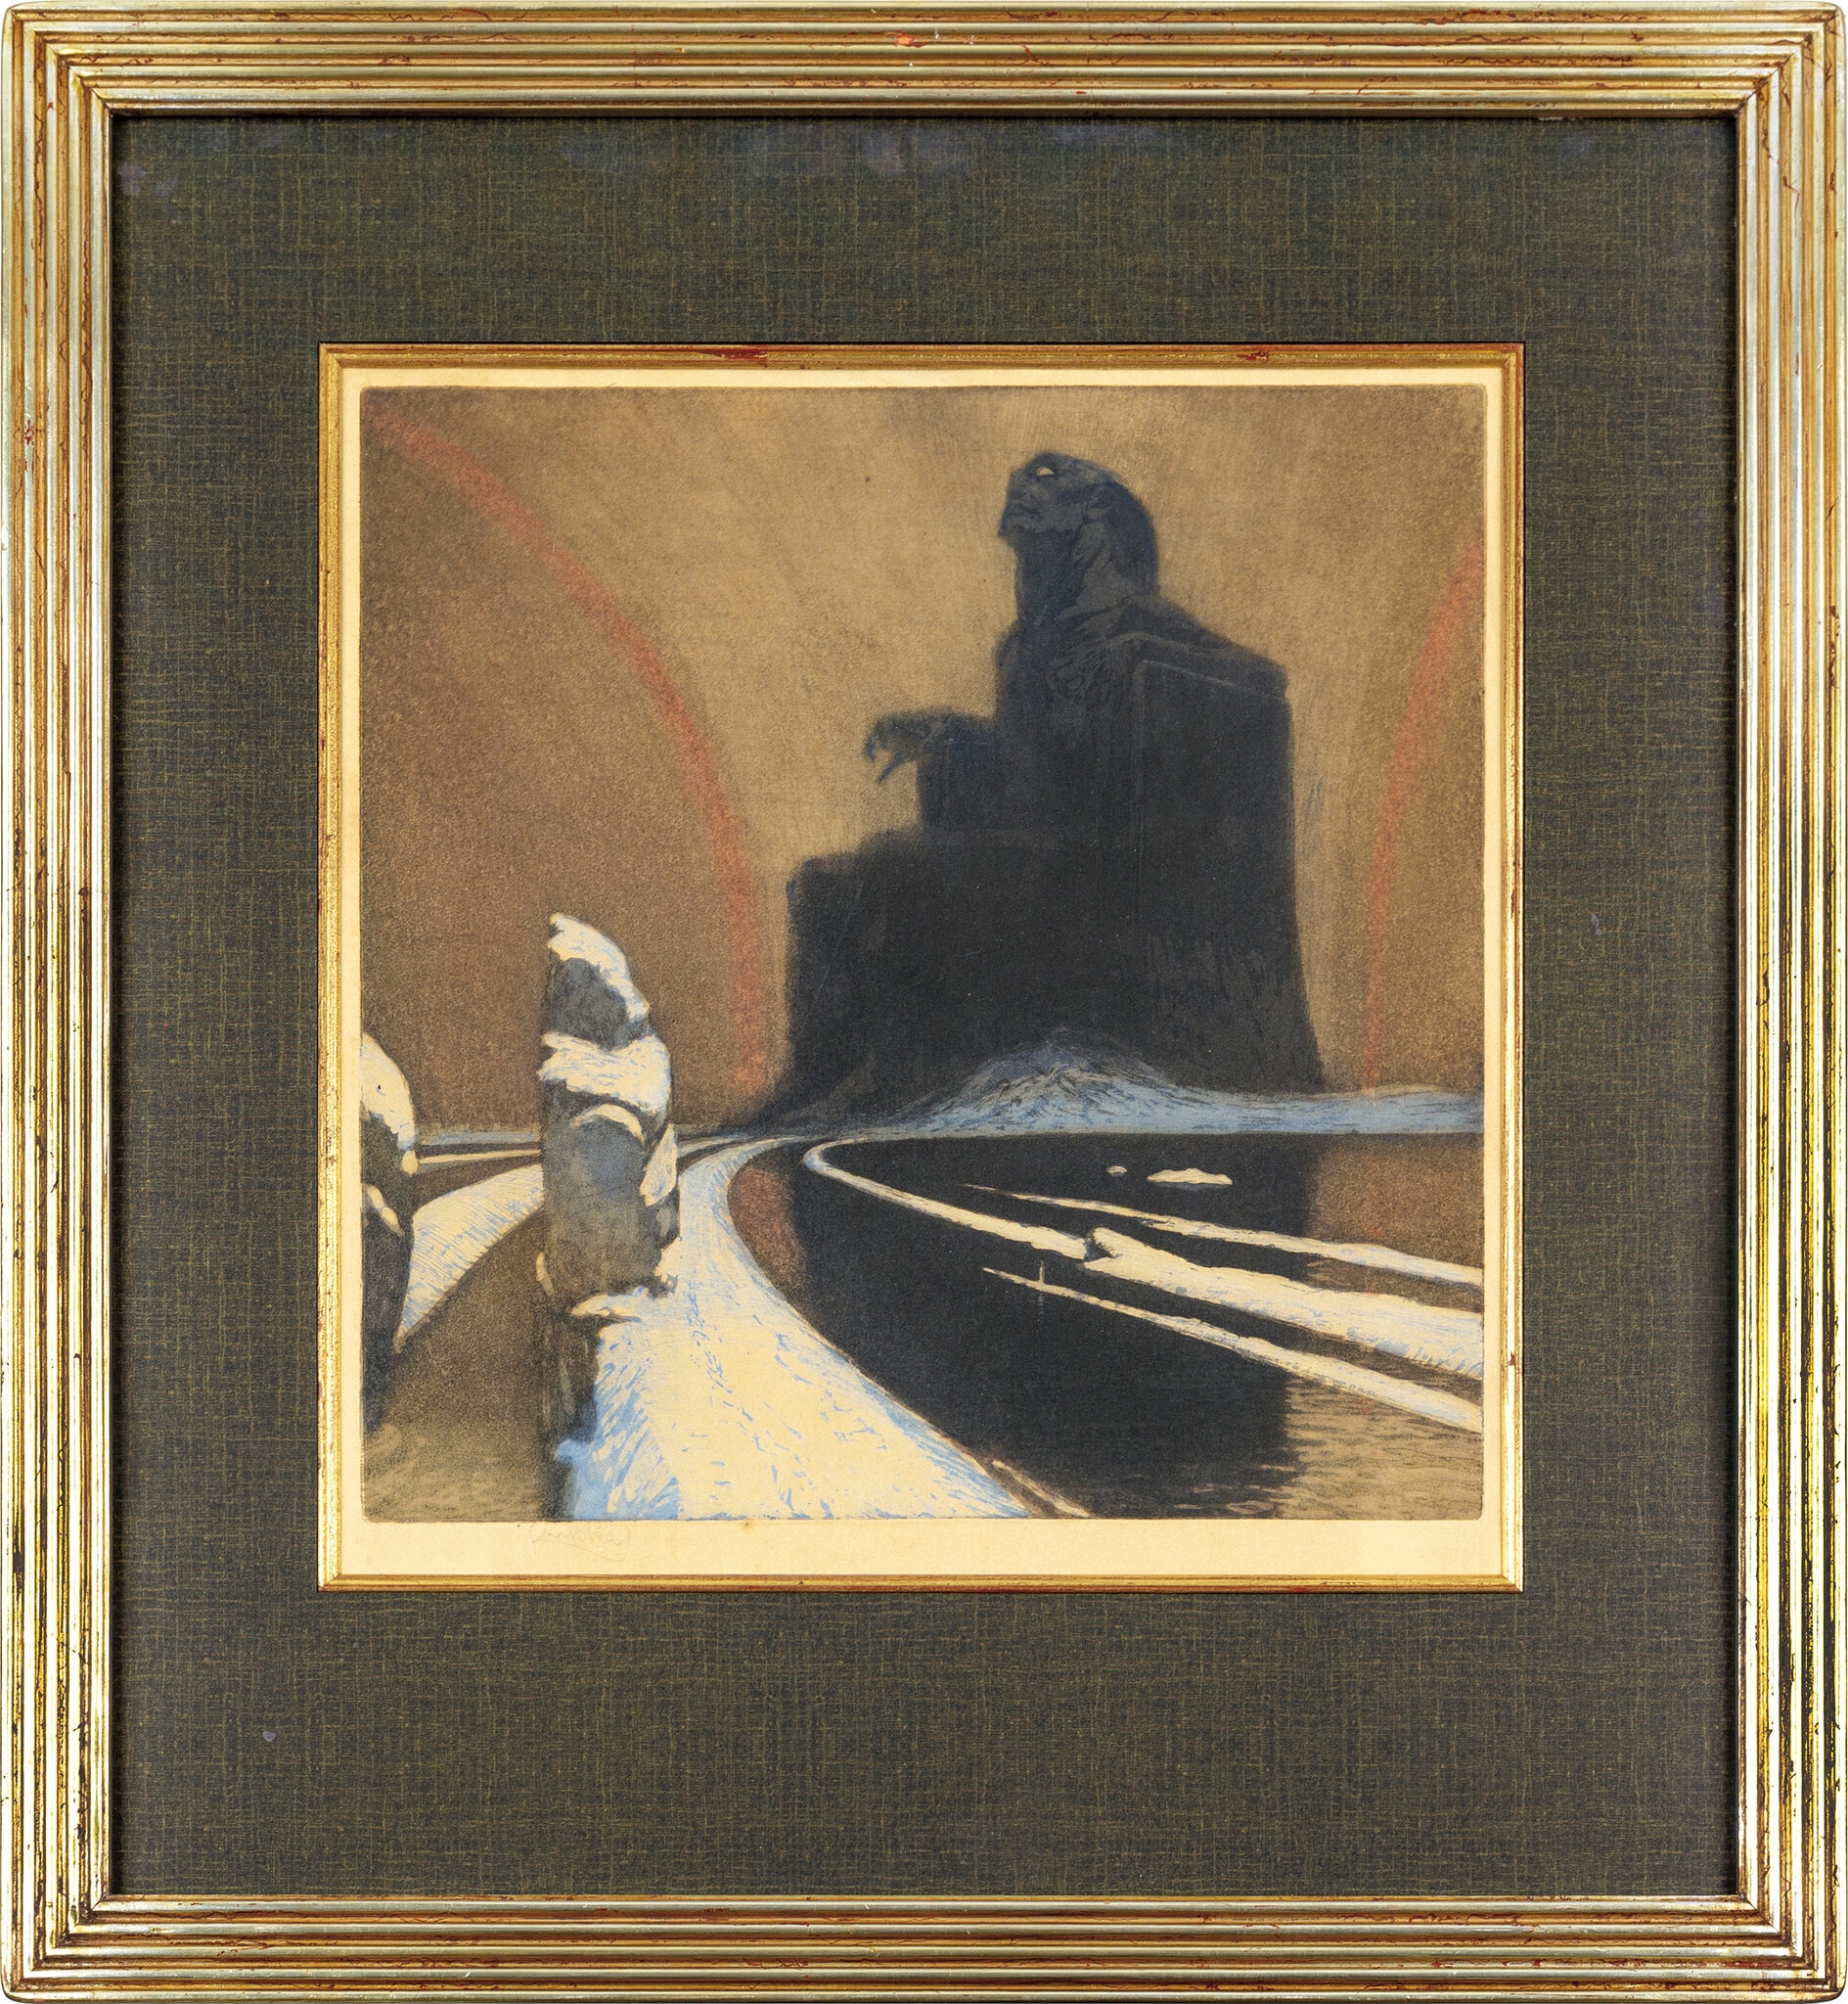 Defiance - Black Idol by František Kupka, 1900–1903